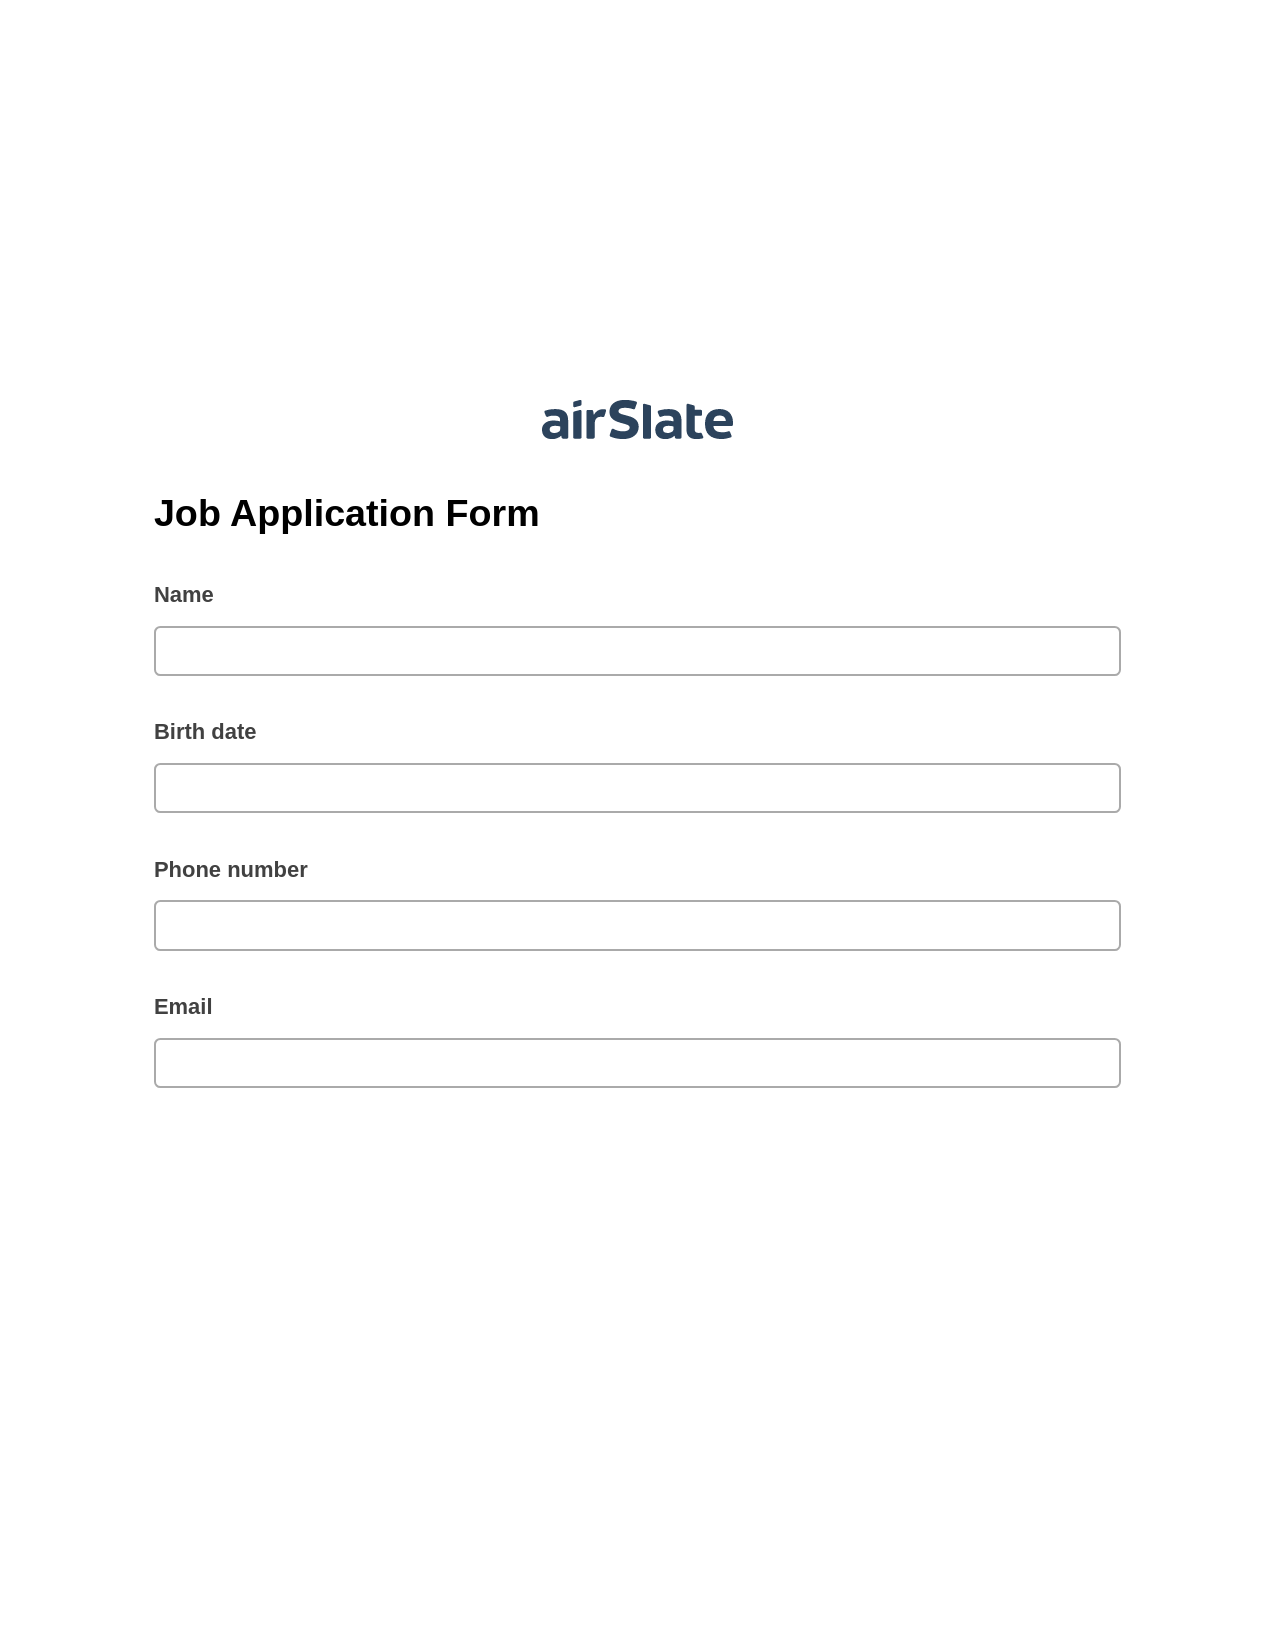 Multirole Job Application Form Pre-fill from MySQL Bot, Create NetSuite Records Bot, Text Message Notification Postfinish Bot